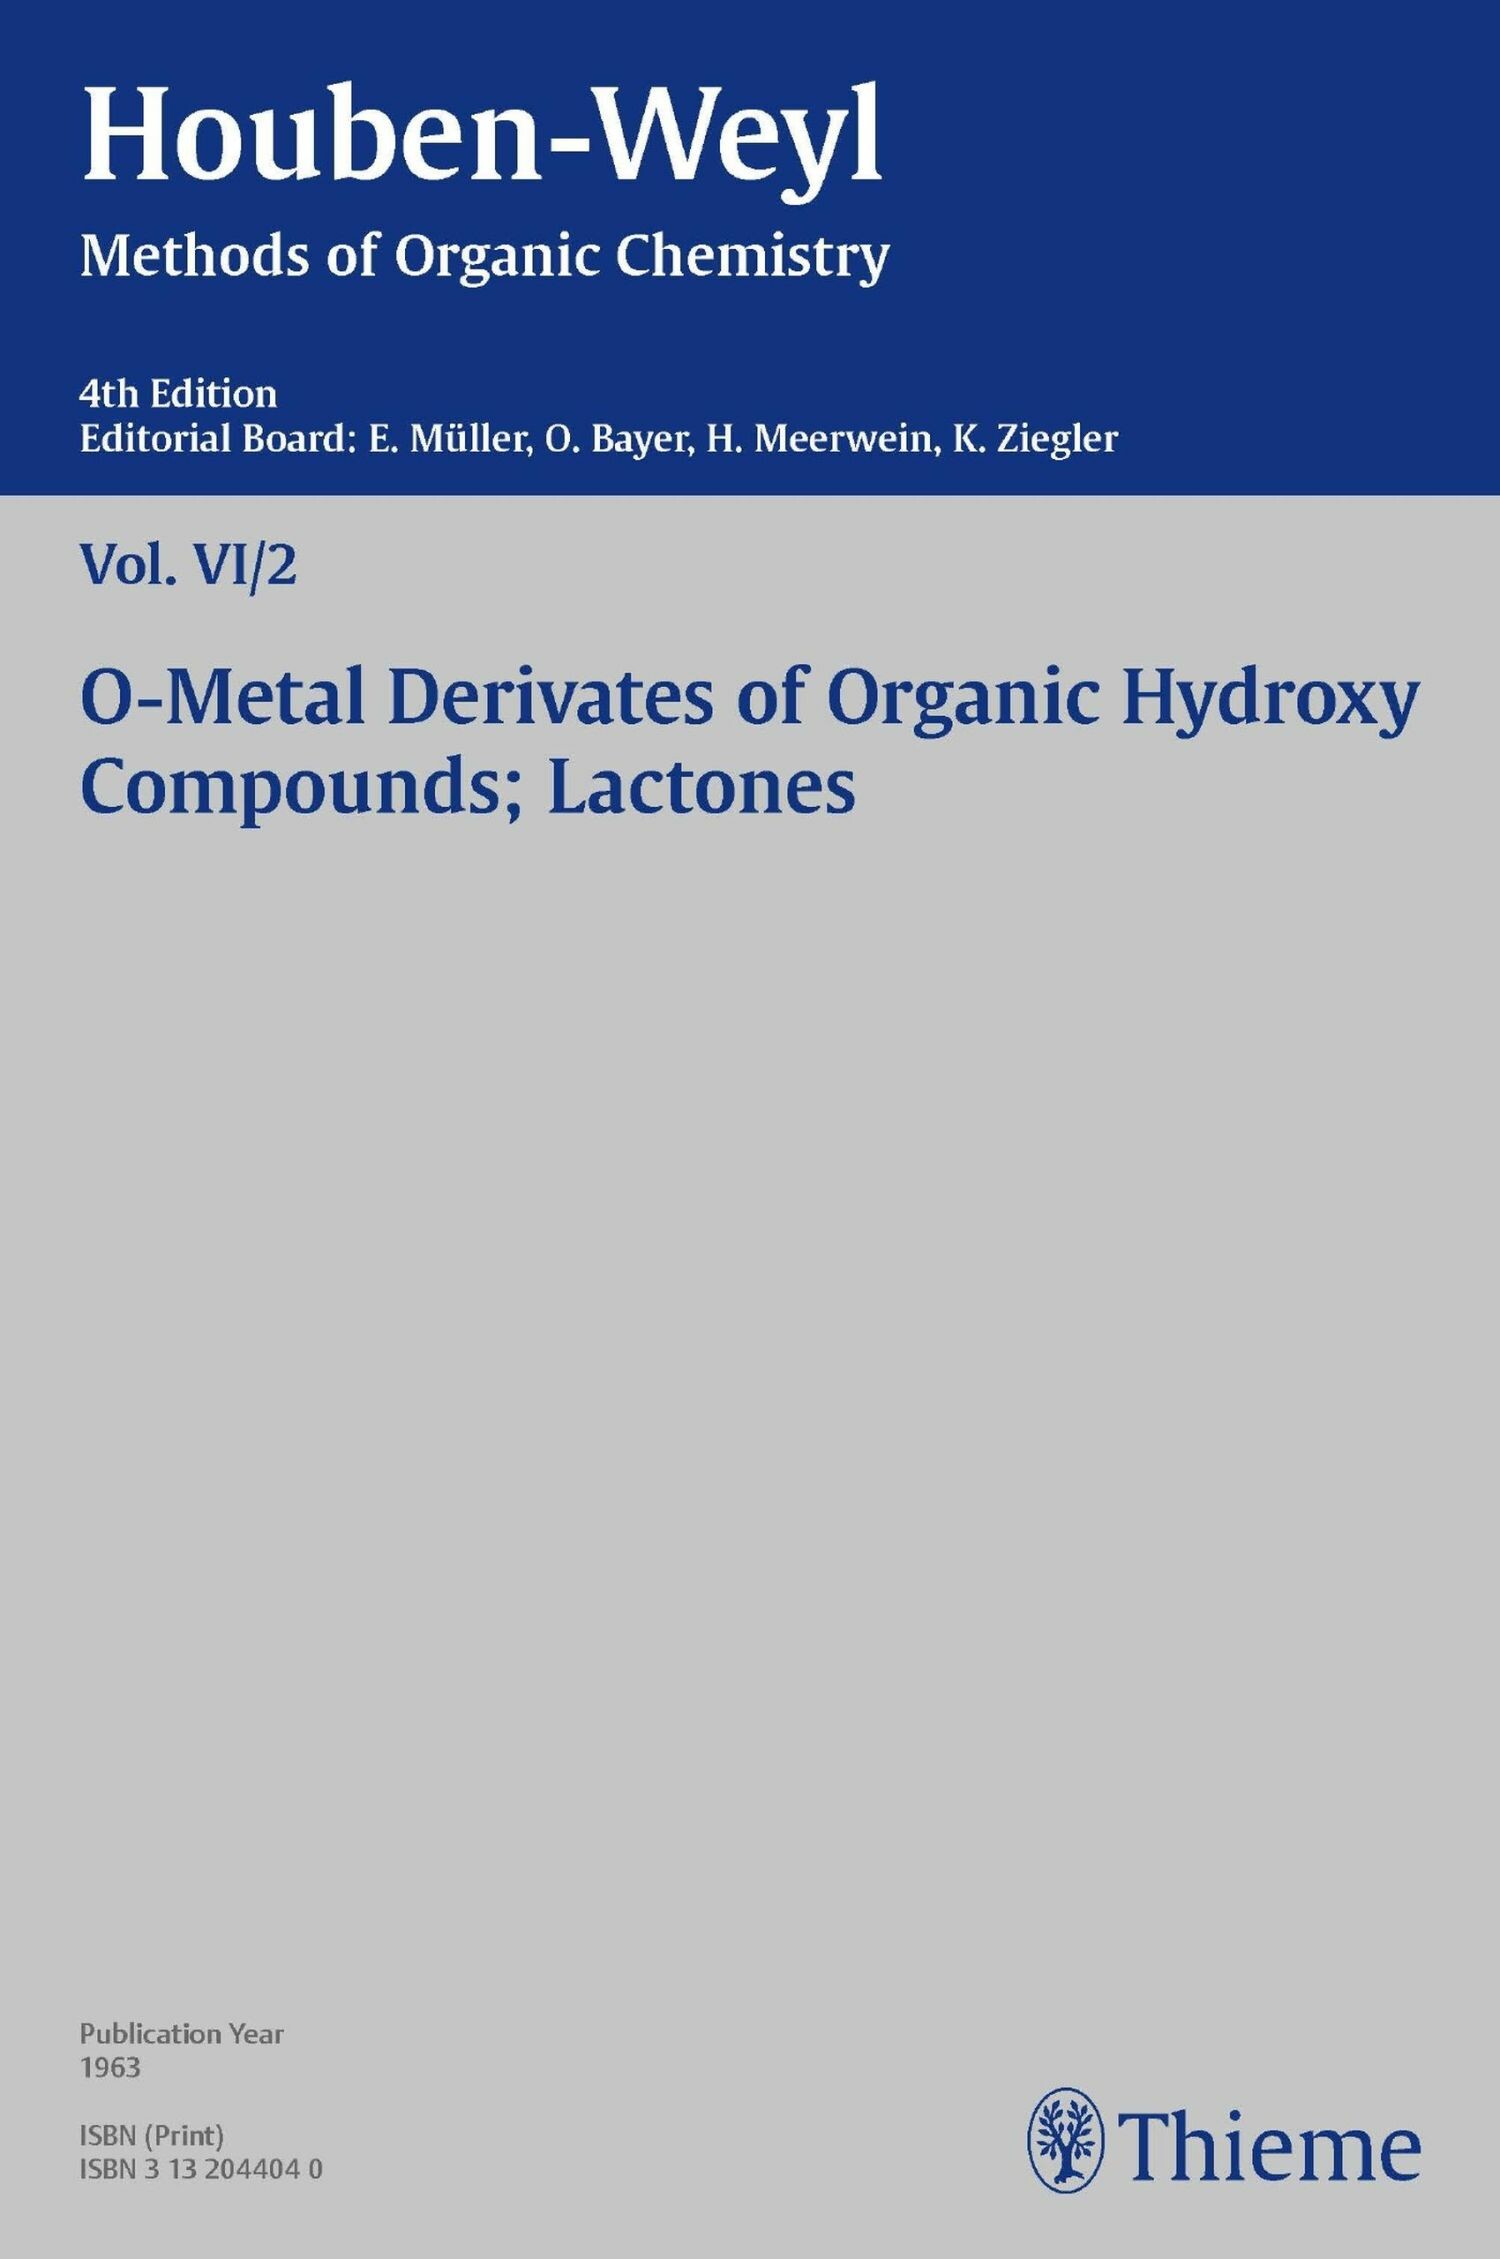 Houben-Weyl Methods of Organic Chemistry Vol. VI/2, 4th Edition